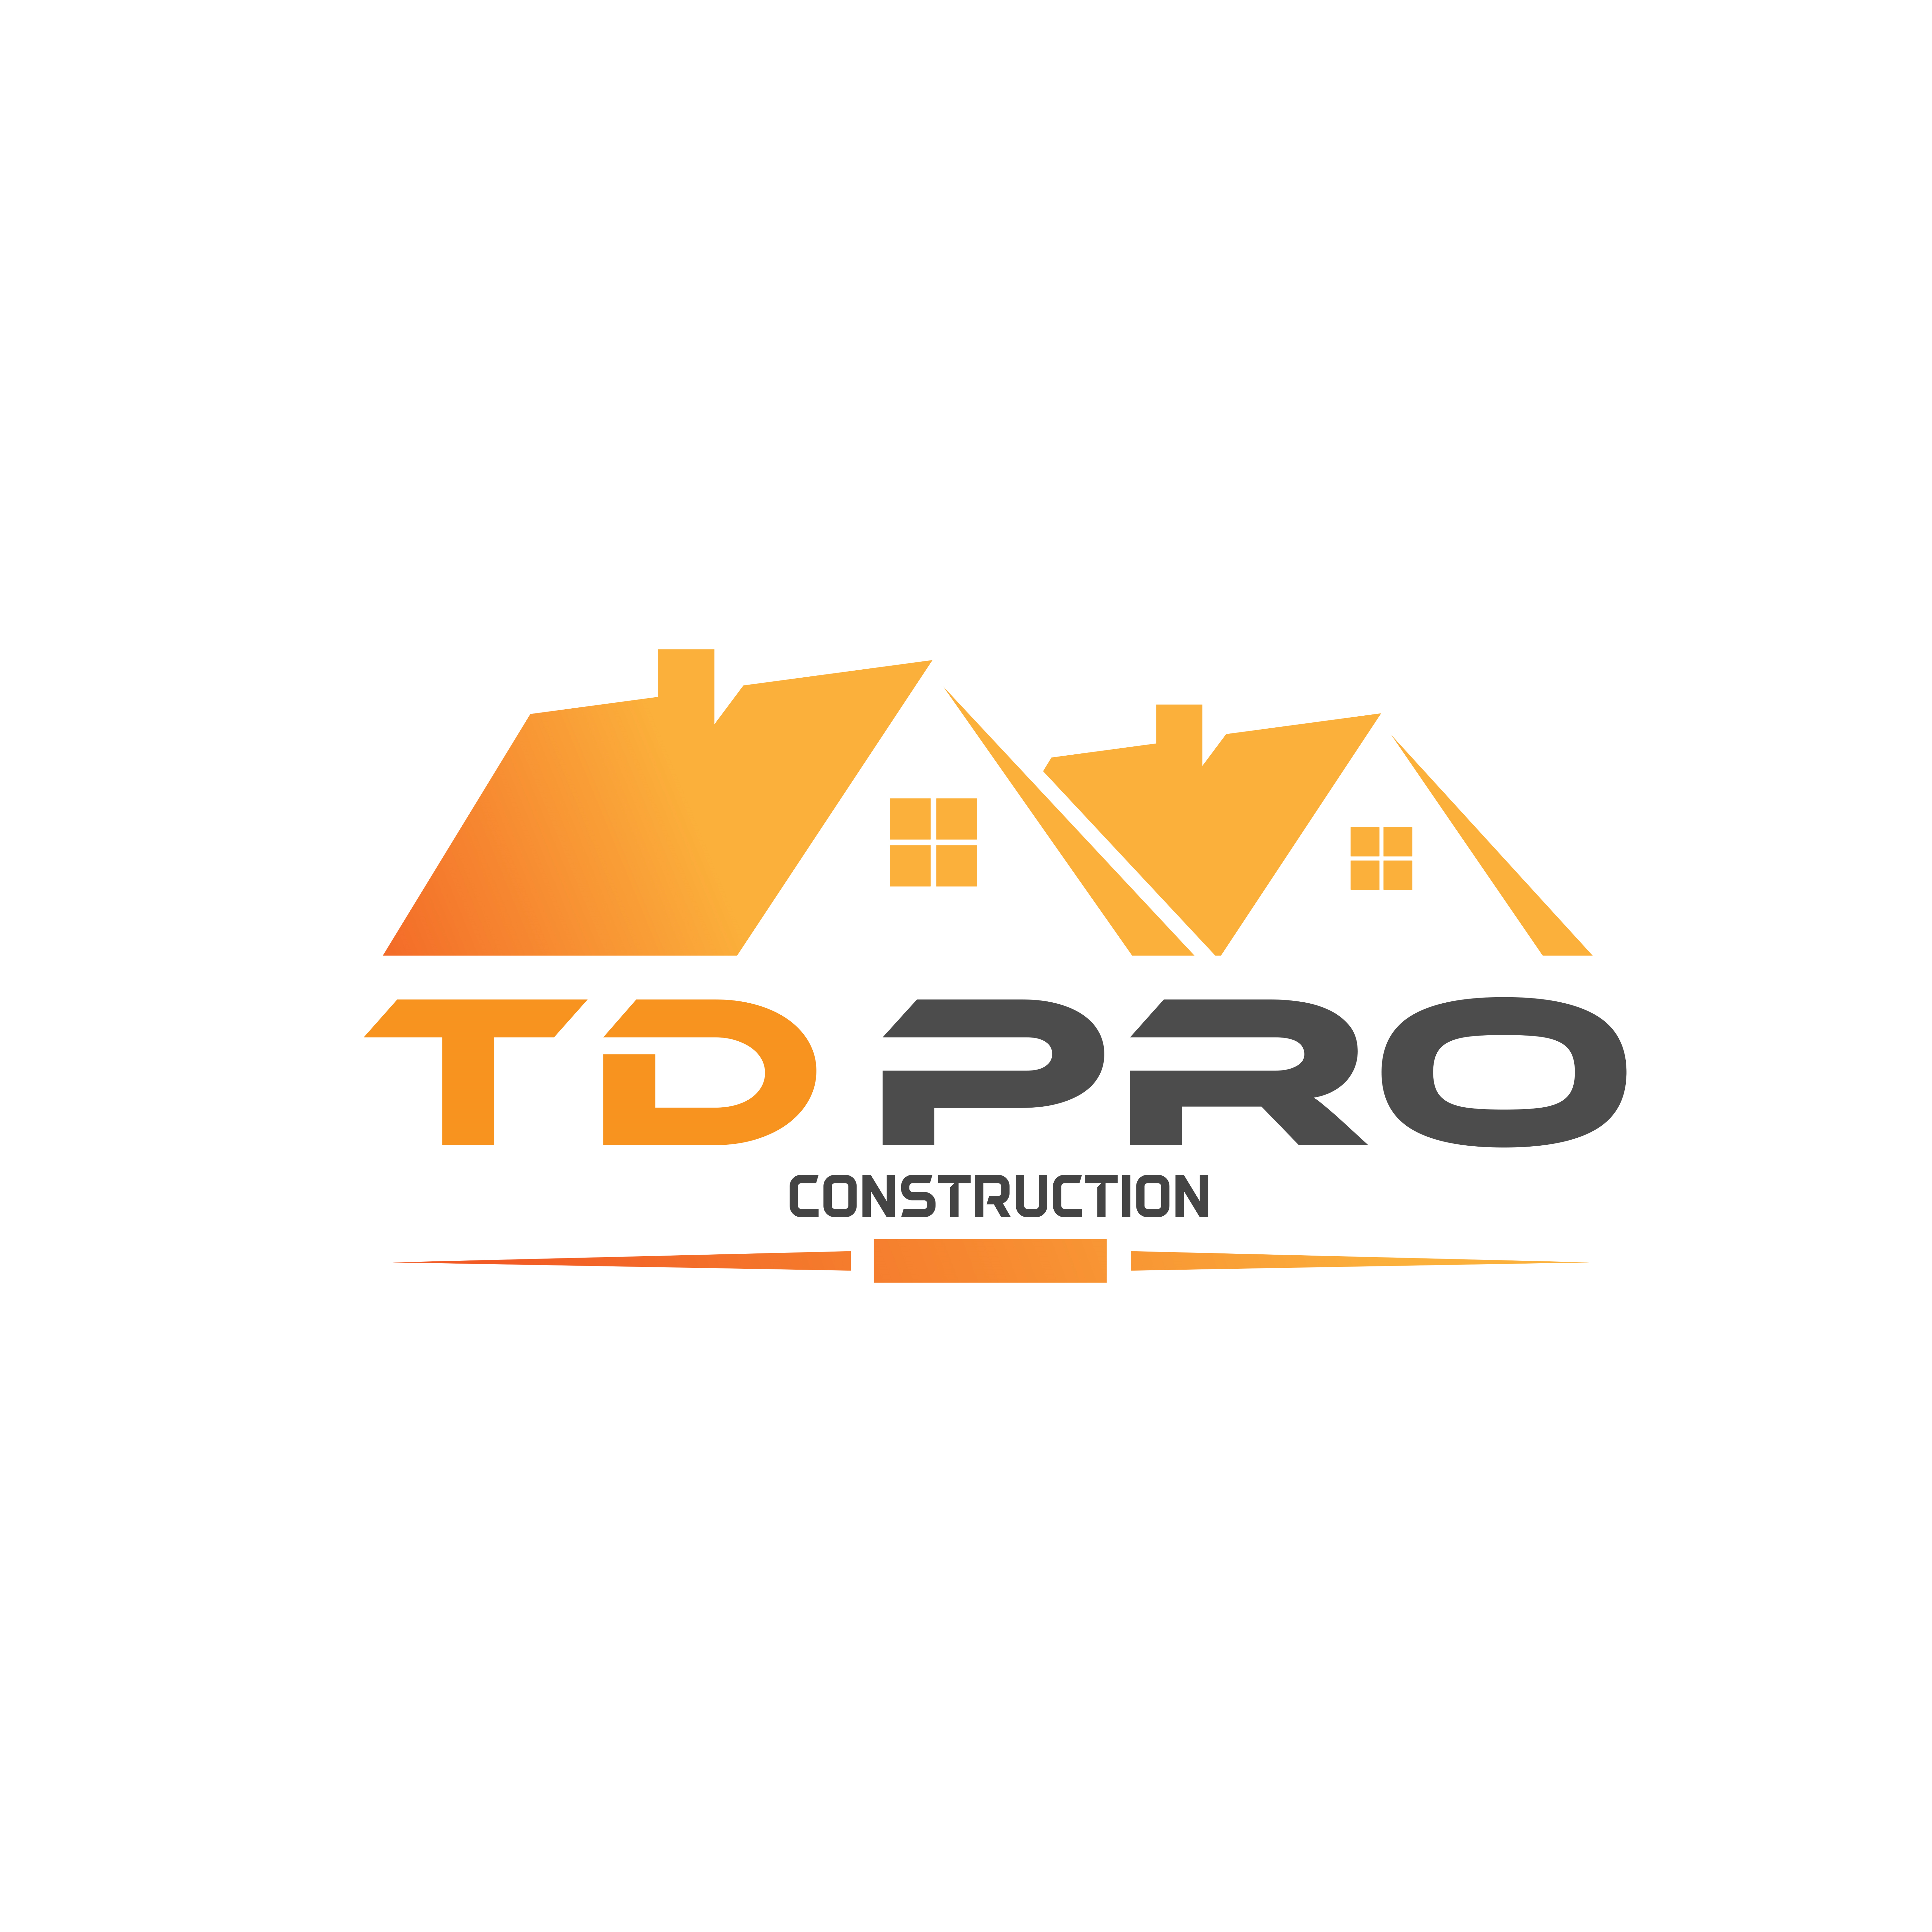 TD Pro Construction LLC